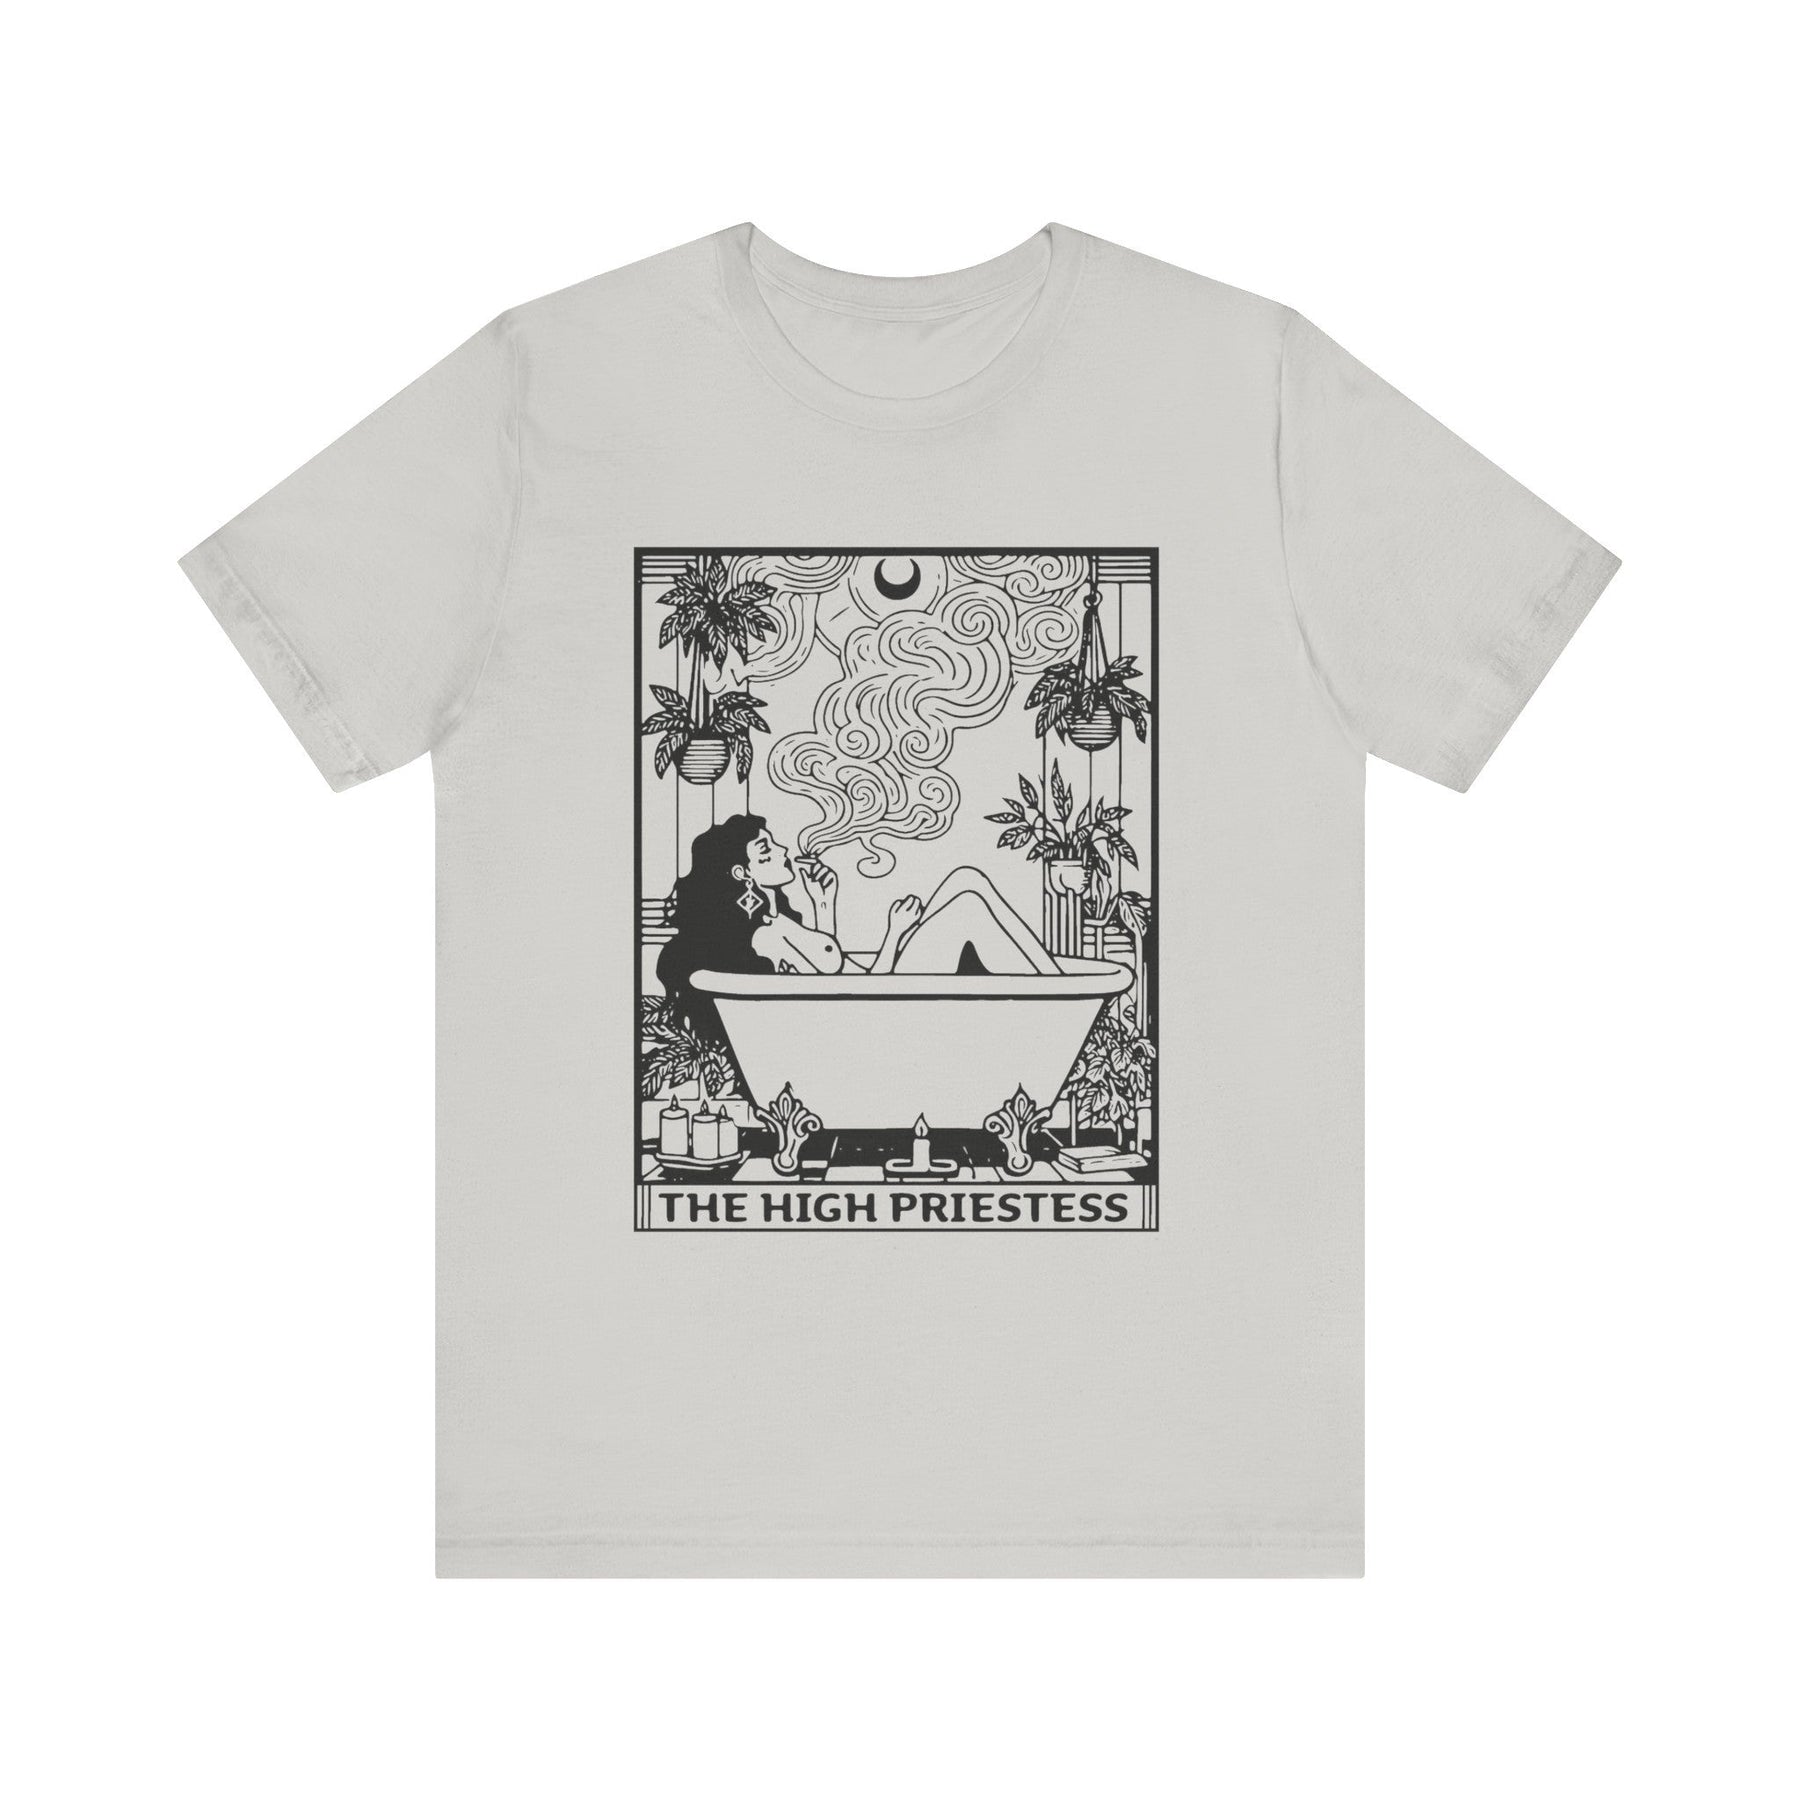 High Priestess Tarot Block Print Short Sleeve Tee - Goth Cloth Co.T - Shirt19253670463147069997